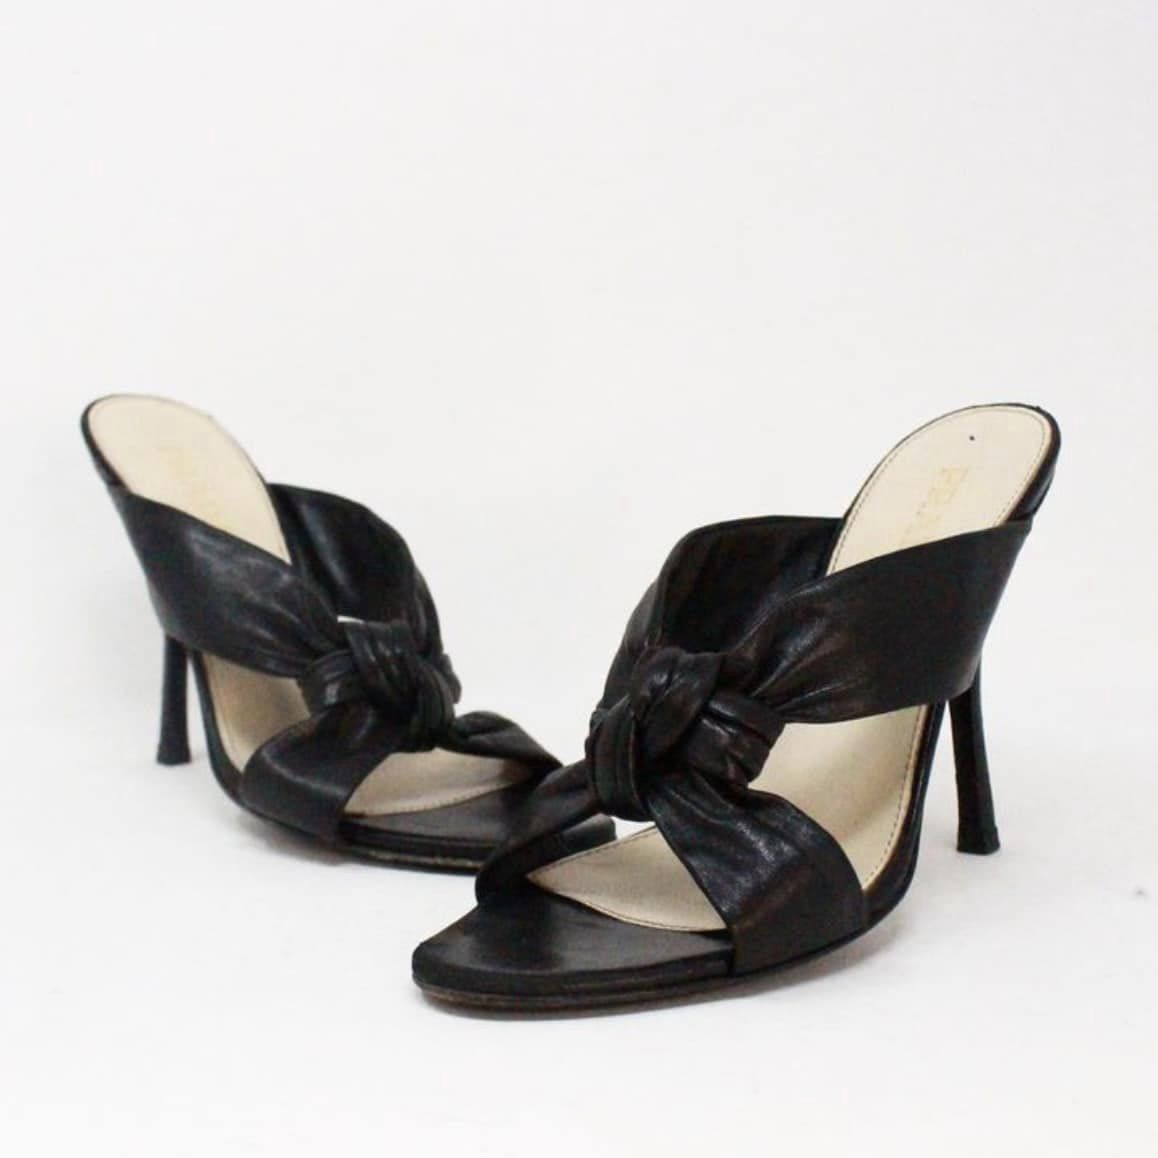 PRADA 39576 Black Leather Knot Heel Sandals US 7 EU 37 a